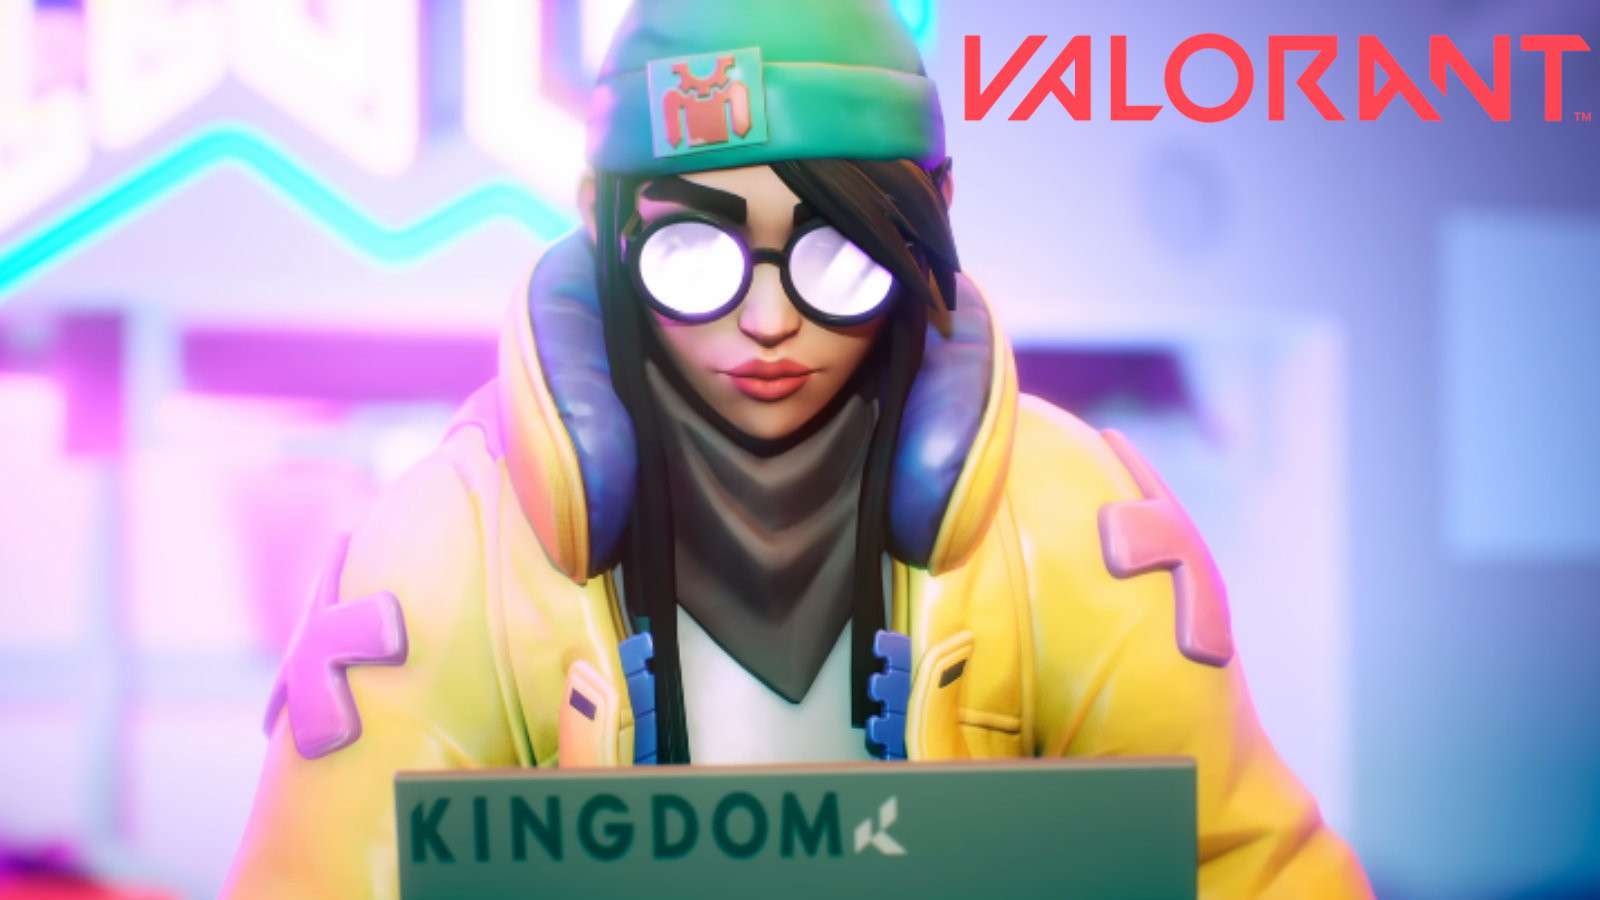 Valorant's Killjoy sits at her computer